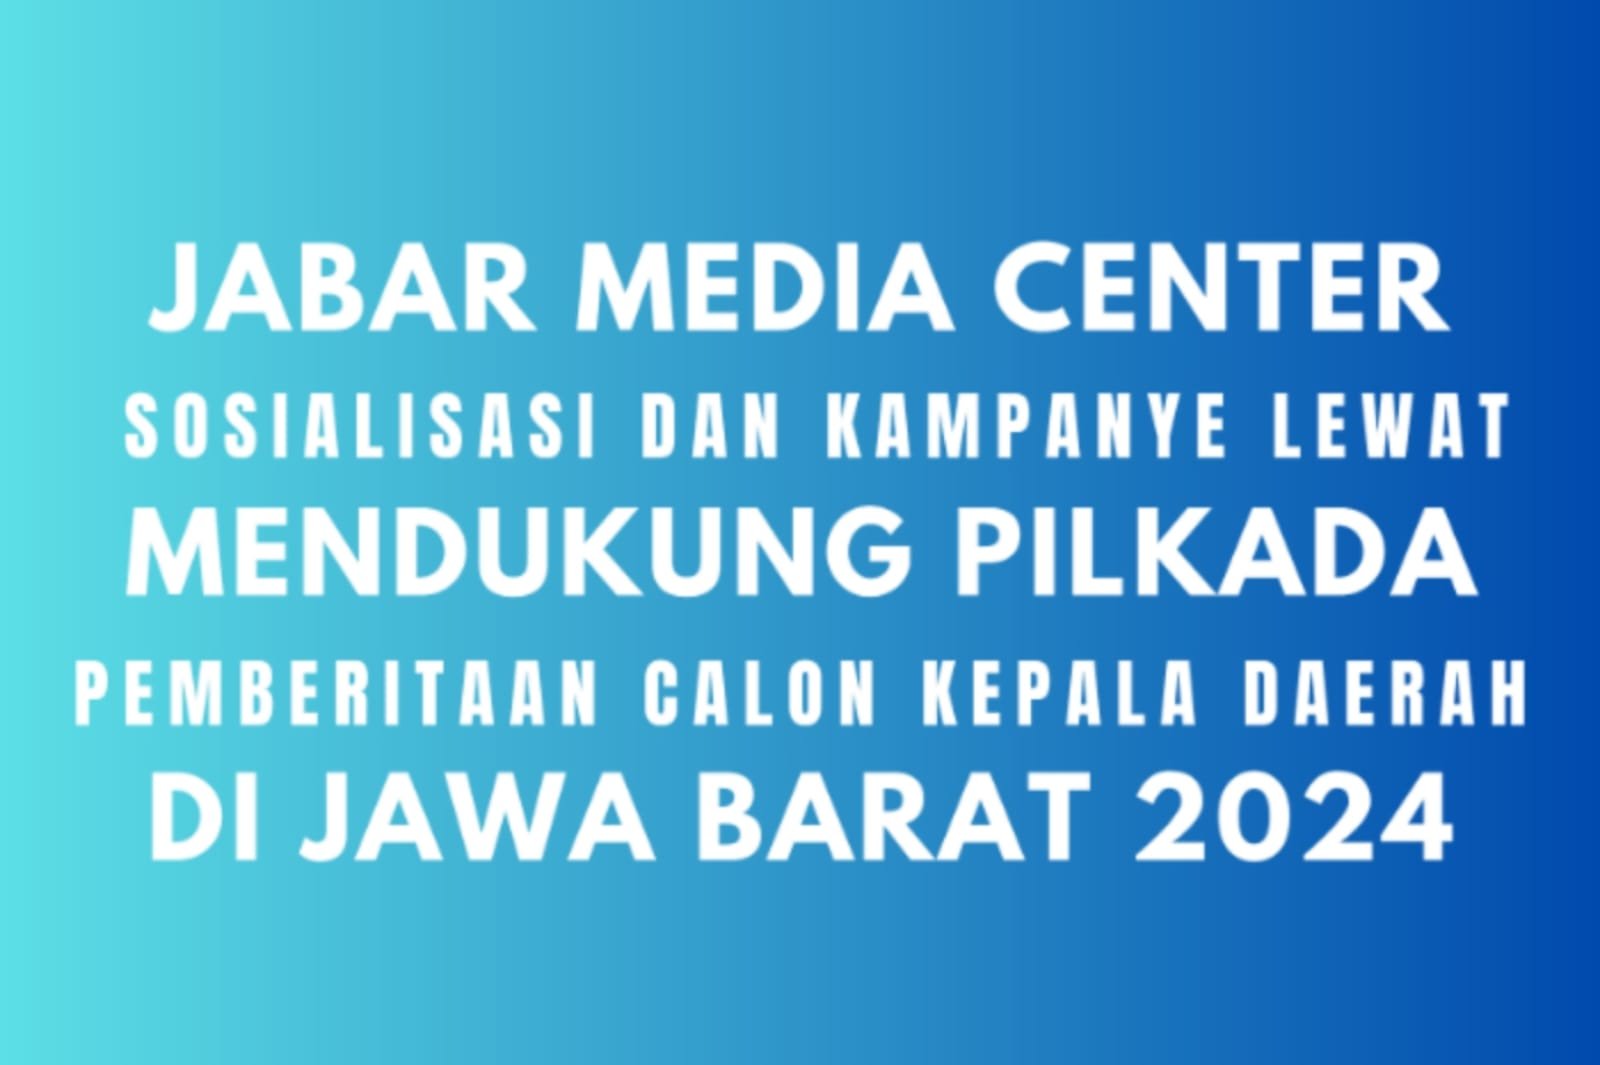 Jabar Media Center Dukung Pilkada Jawa Barat 2024 untuk Menangkan Pilkada di Jawa Barat Lewat Publikasi